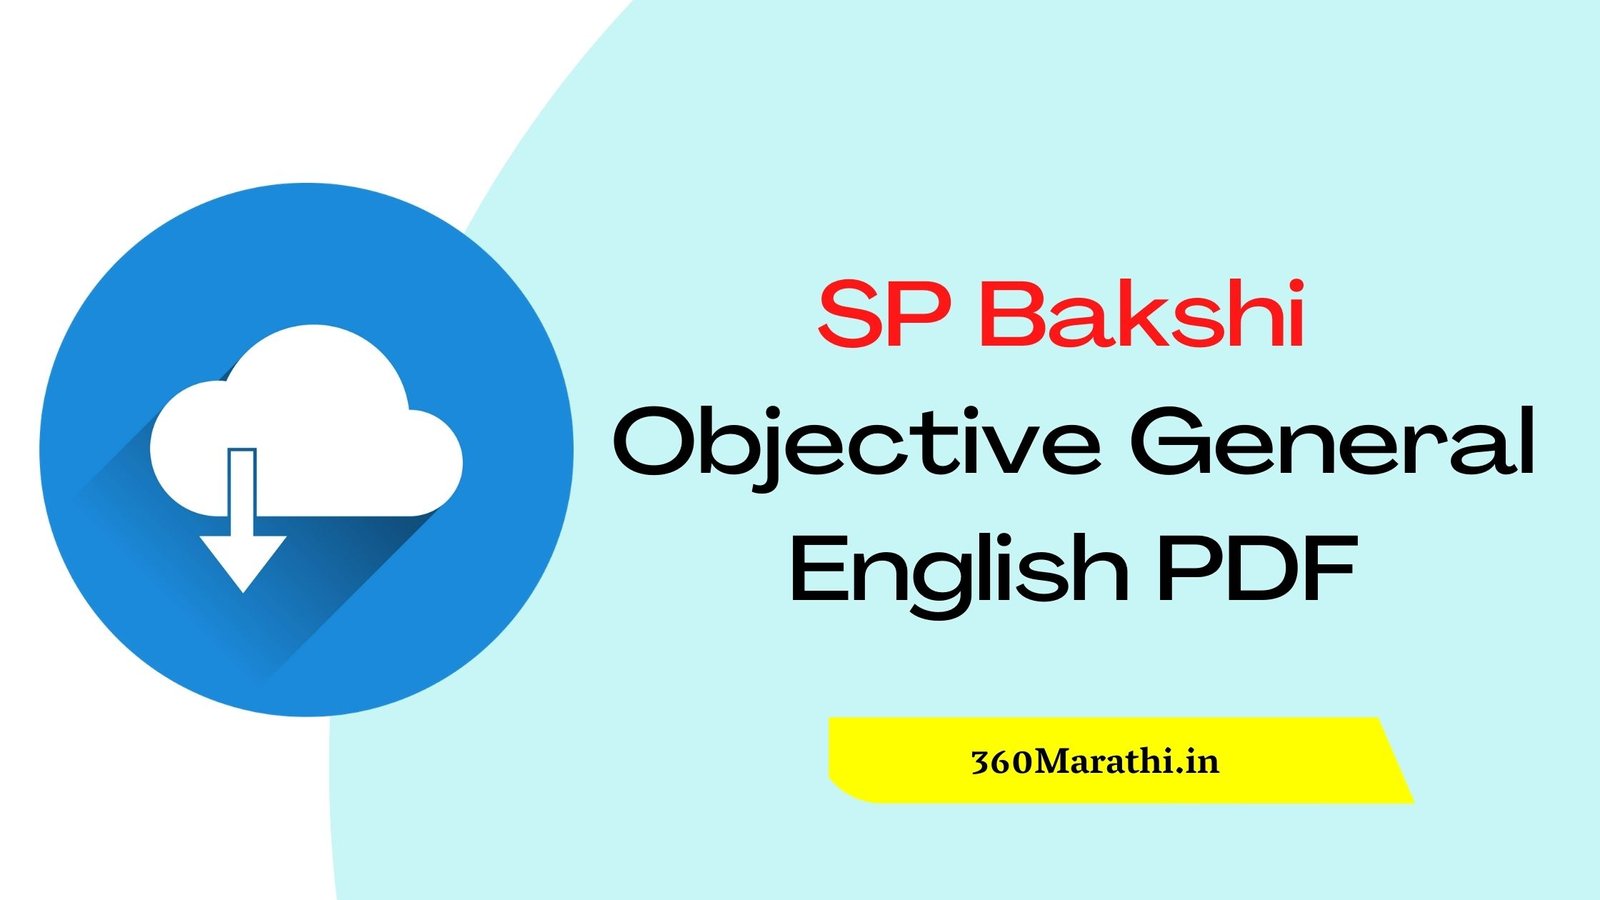 SP Bakshi Objective General English PDF